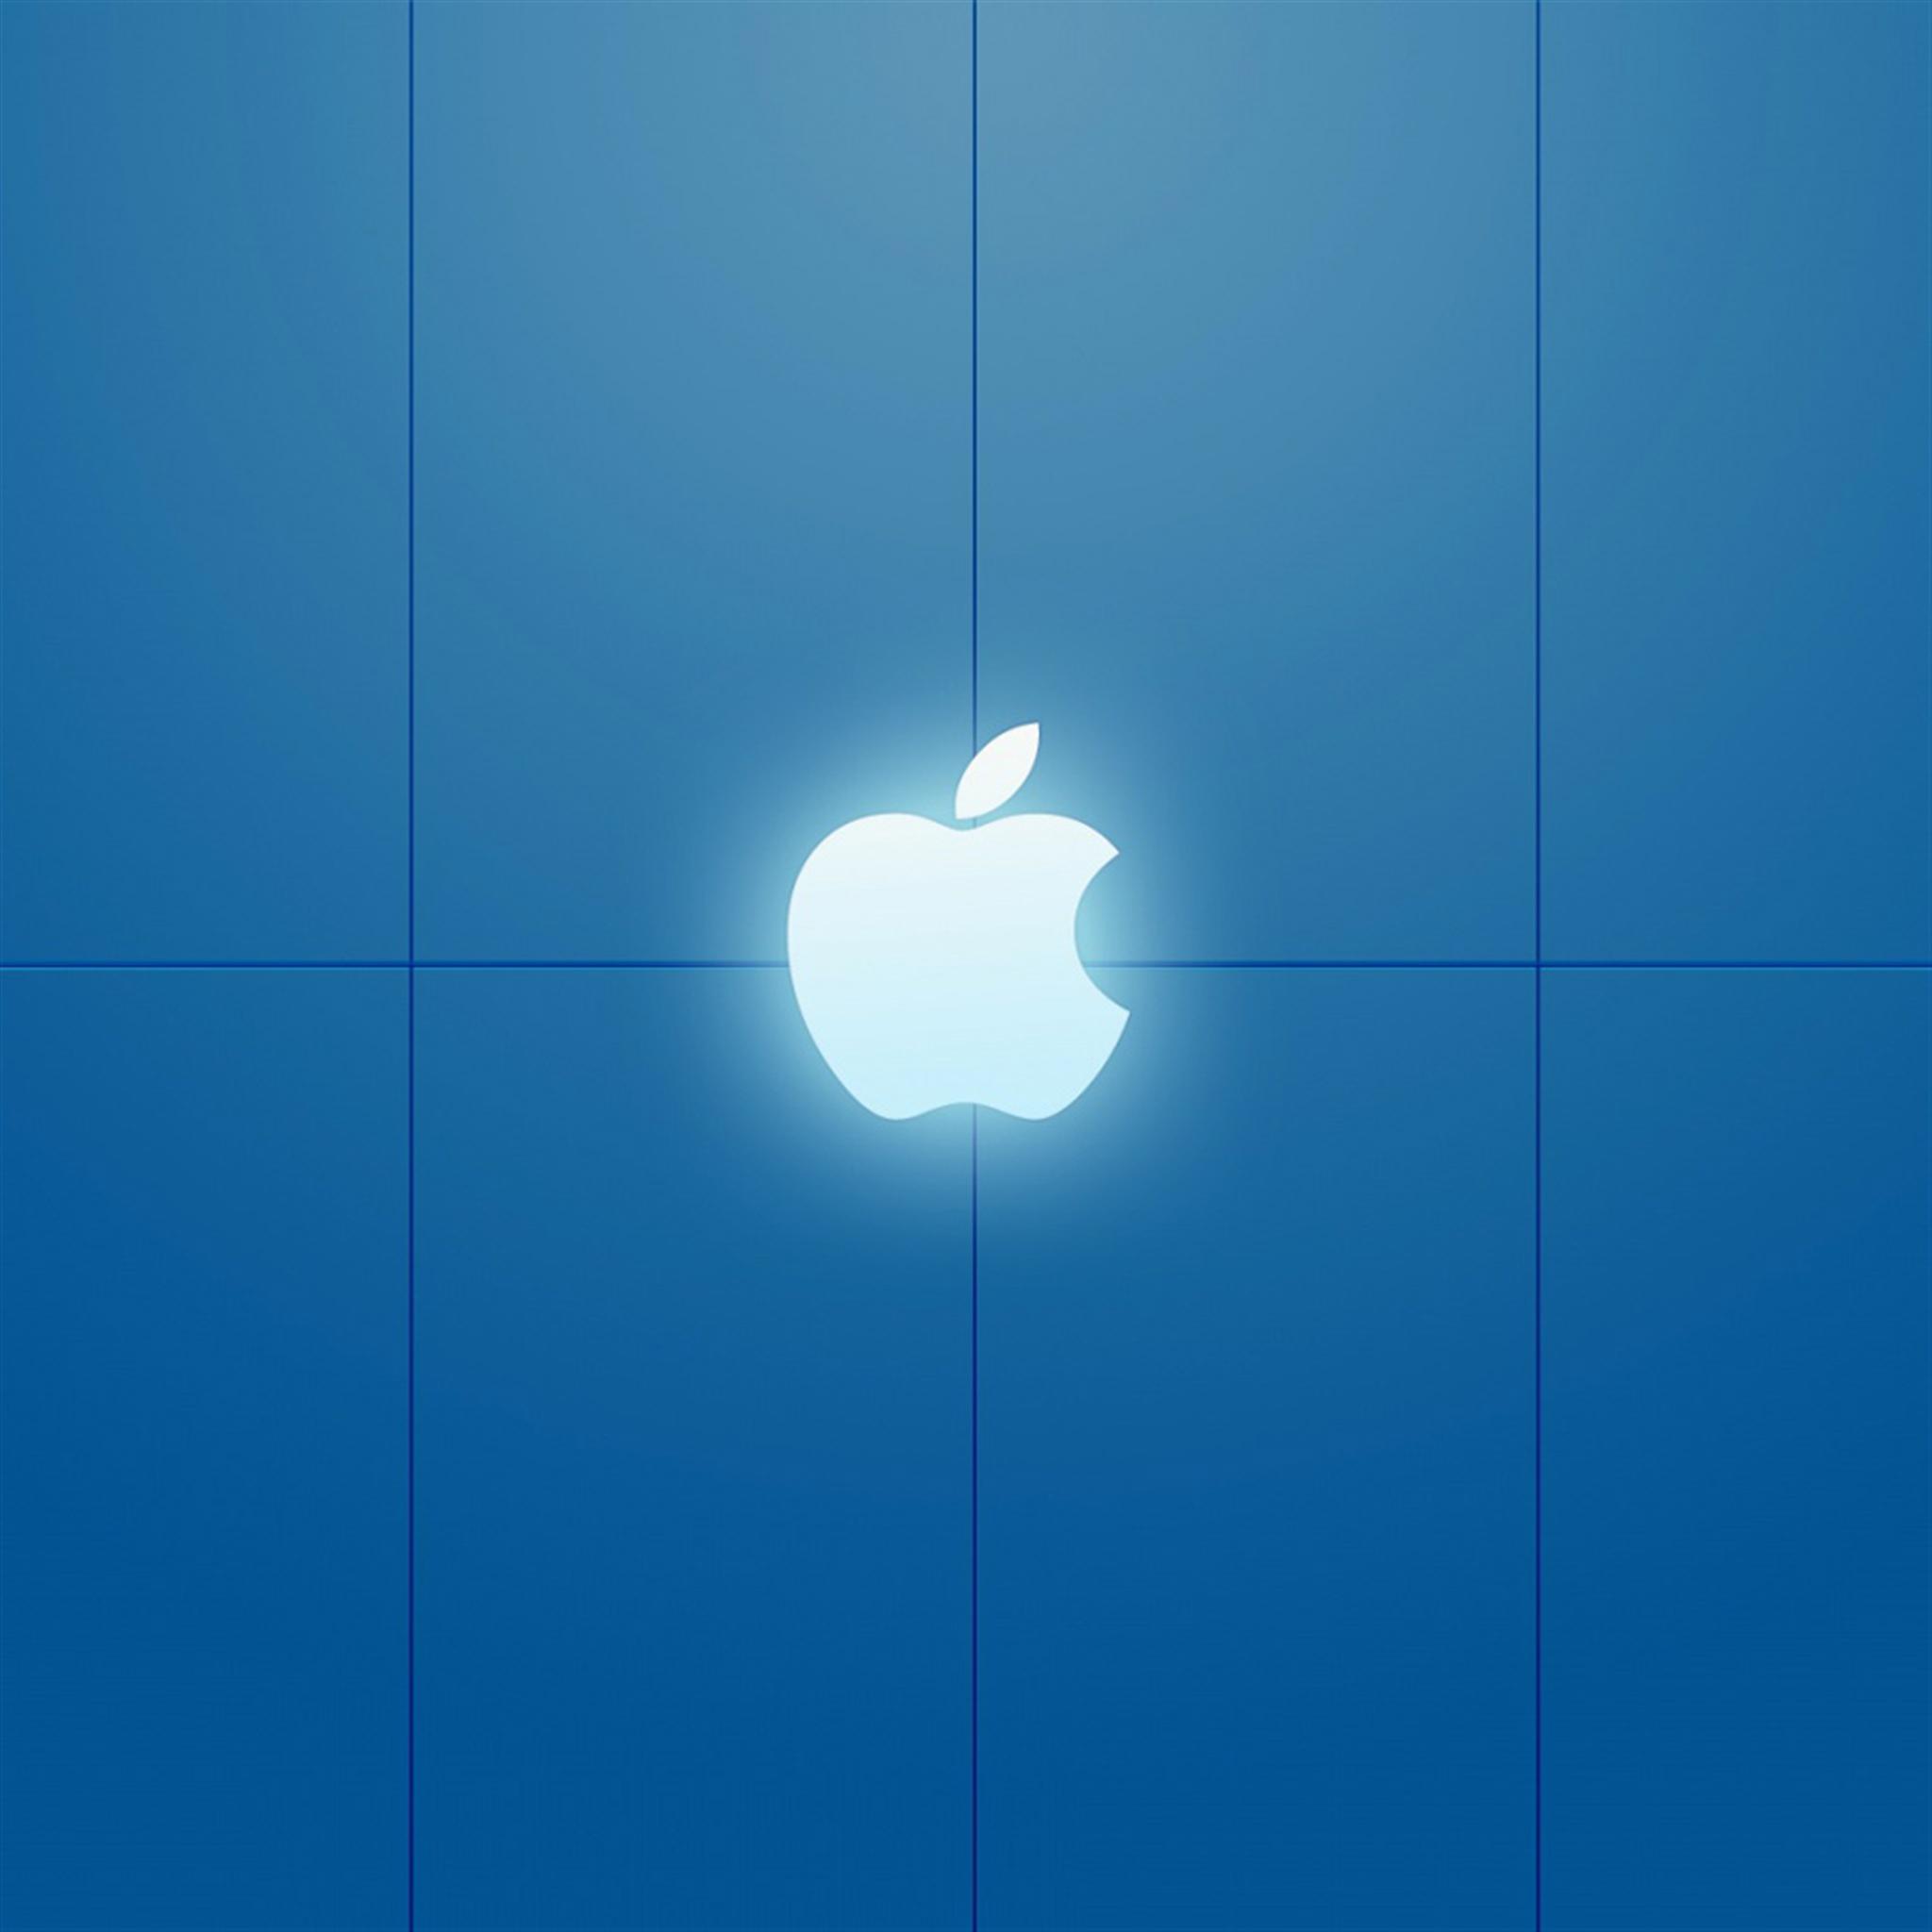 Apple iPad Air Wallpaper HD Retina And